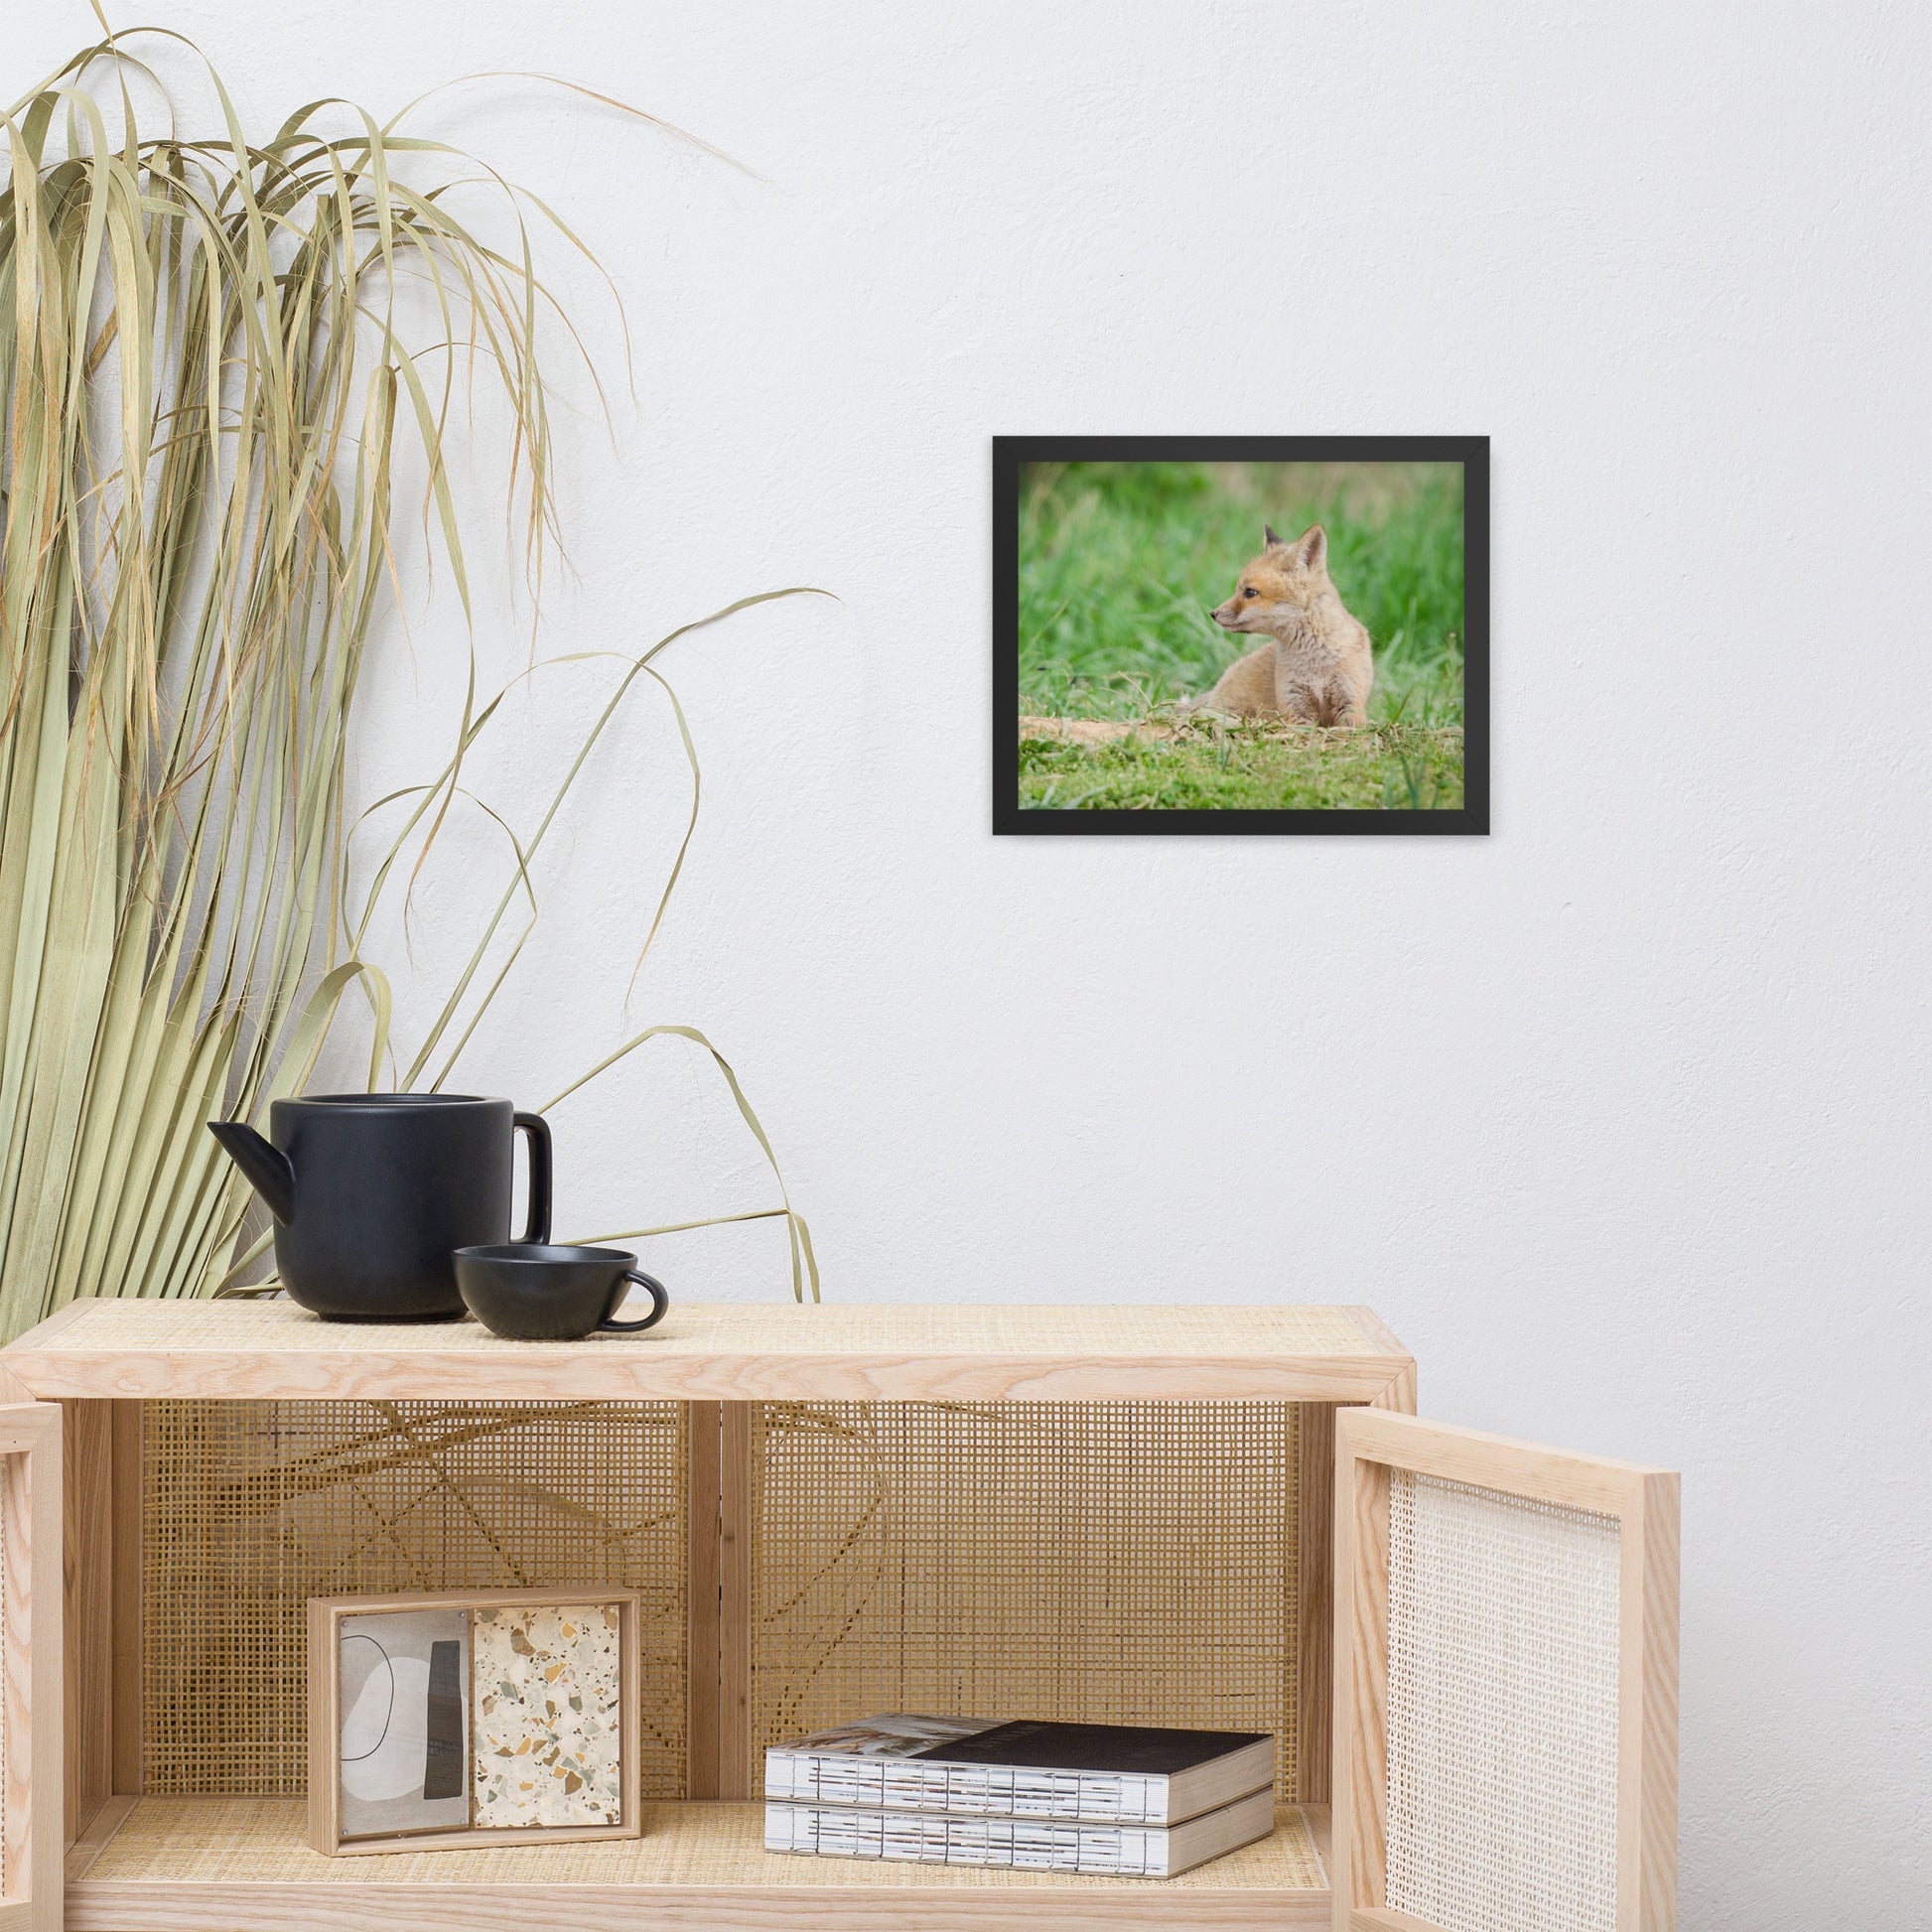 Fox Framed Art: Red Fox Pups - Chilling/ Animal / Wildlife / Nature Photographic Artwork - Framed Artwork - Wall Decor